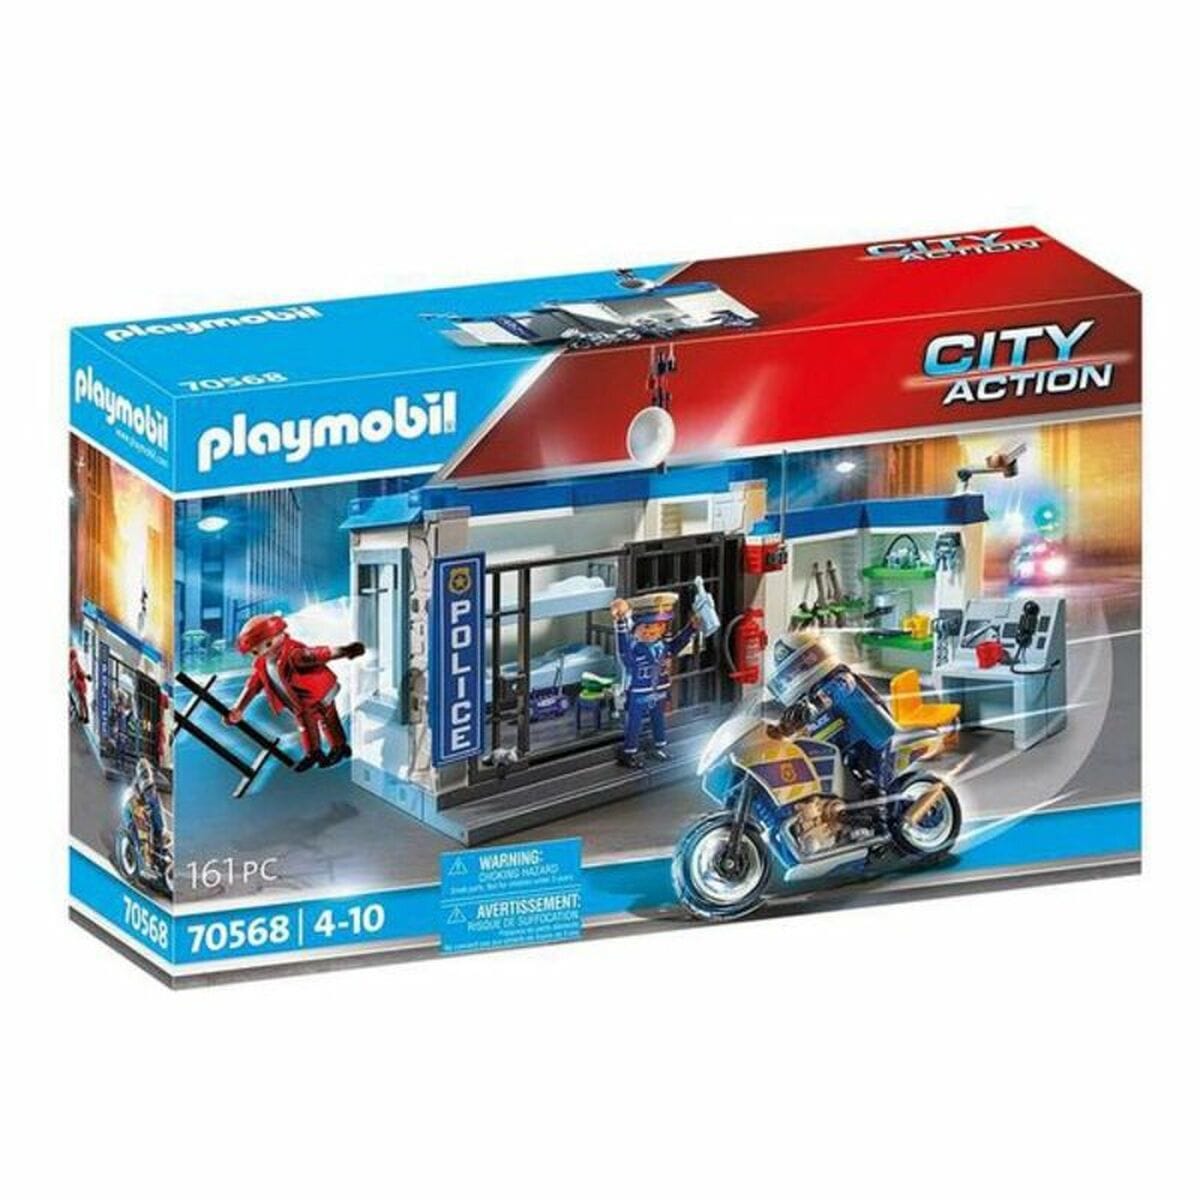 Playmobil Spielzeug | Kostüme > Spielzeug und Spiele > Weiteres spielzeug Playset City Action Prison Escape Playmobil 70568 Polizei (161 pcs)